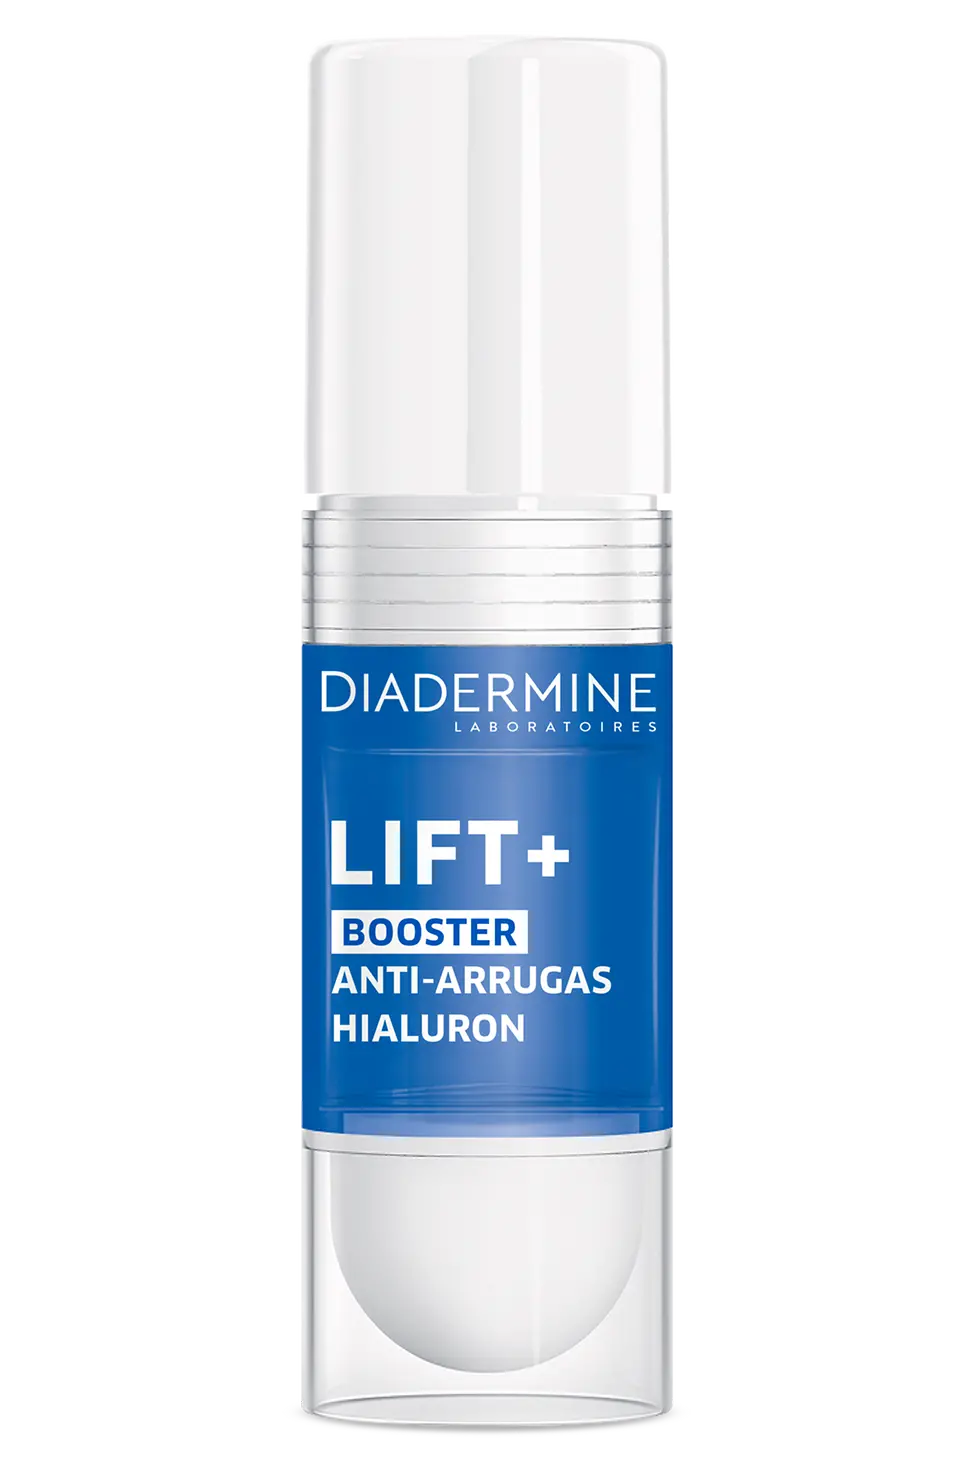 Booster Anti-arrugas Diadermine Lift+